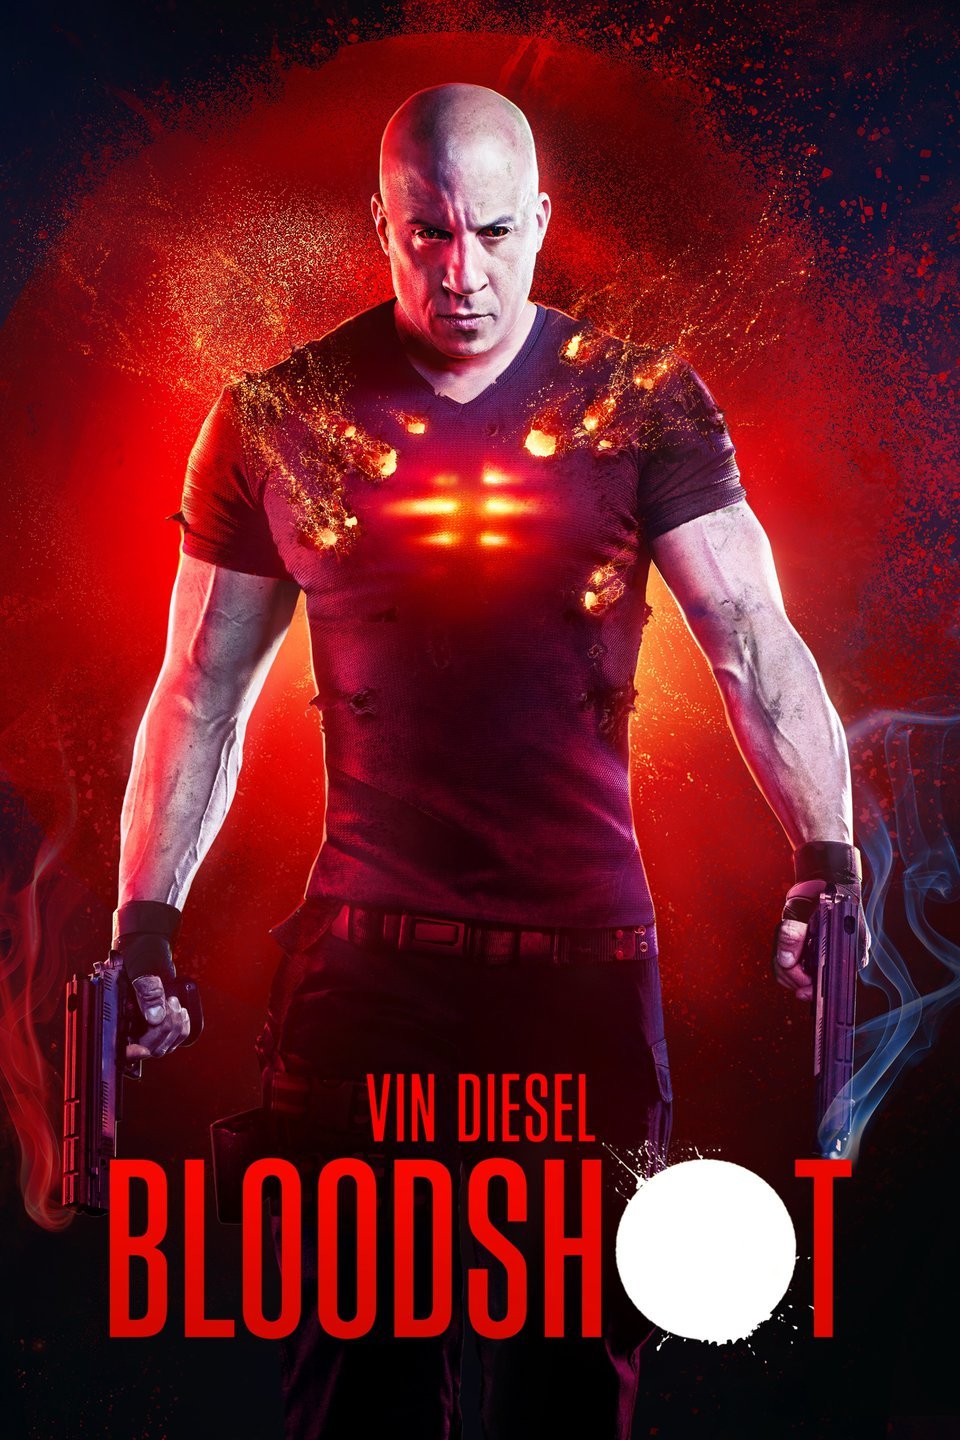 [MINI Super-HQ] Bloodshot (2020) จักรกลเลือดดุ [1080p] [พากย์ไทย 5.1 + เสียงอังกฤษ DTS] [บรรยายไทย + อังกฤษ] [เสียงไทย + ซับไทย] [PANDAFILE]